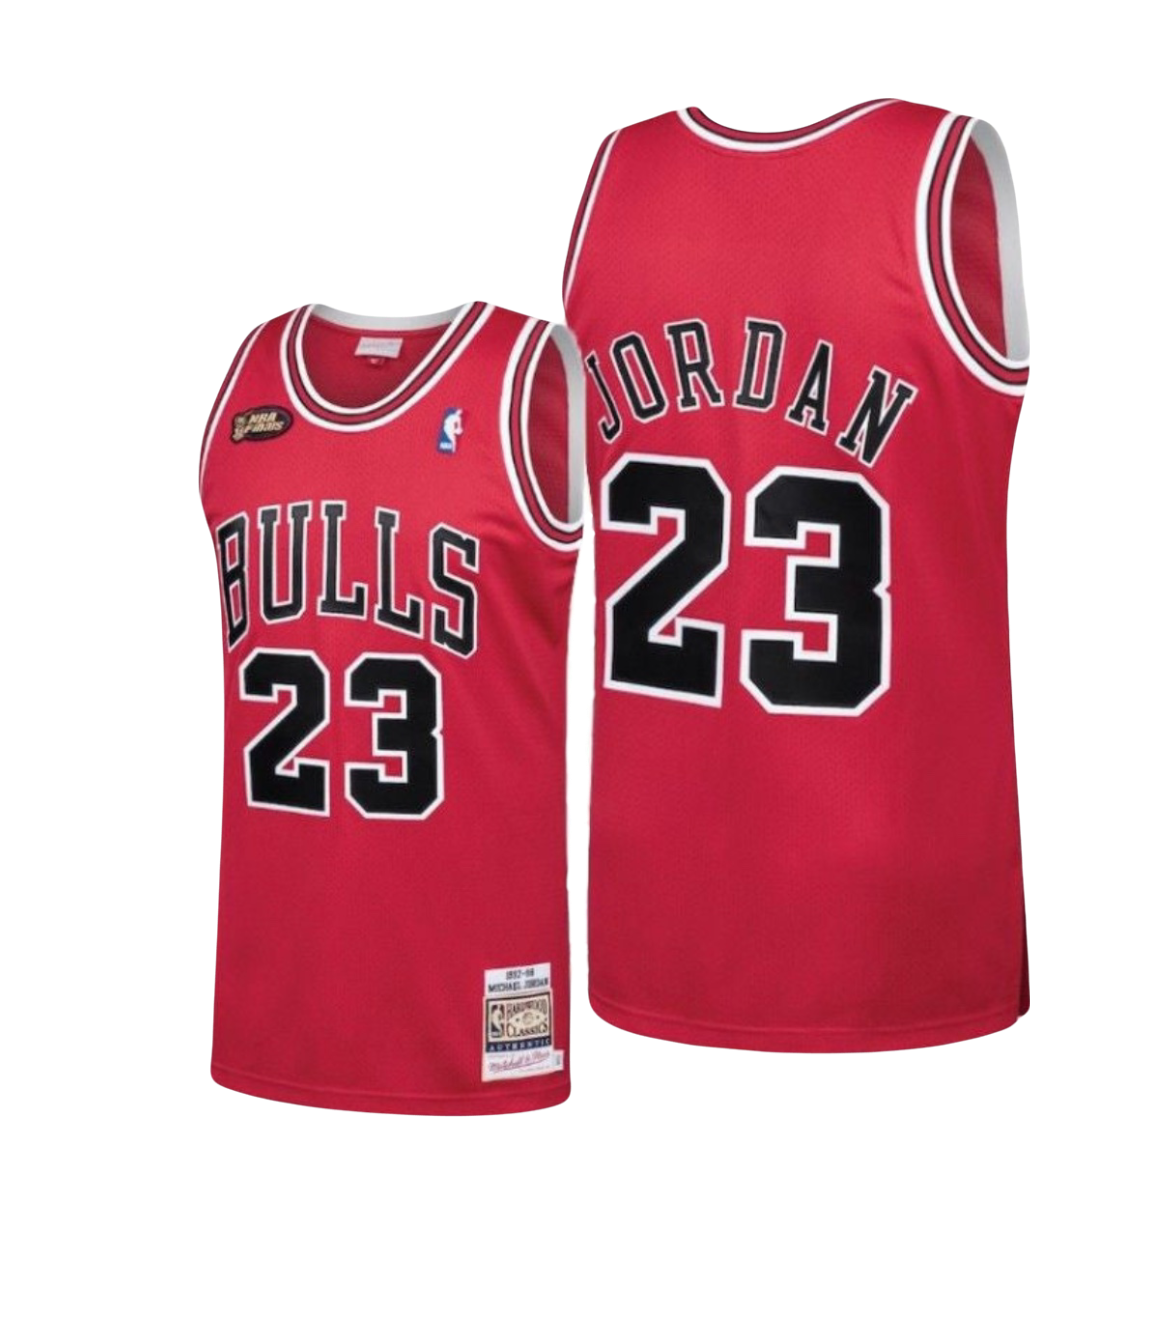 Mitchell & Ness Chicago Bulls Alternate 1997-98 Michael Jordan Authentic Jersey Black